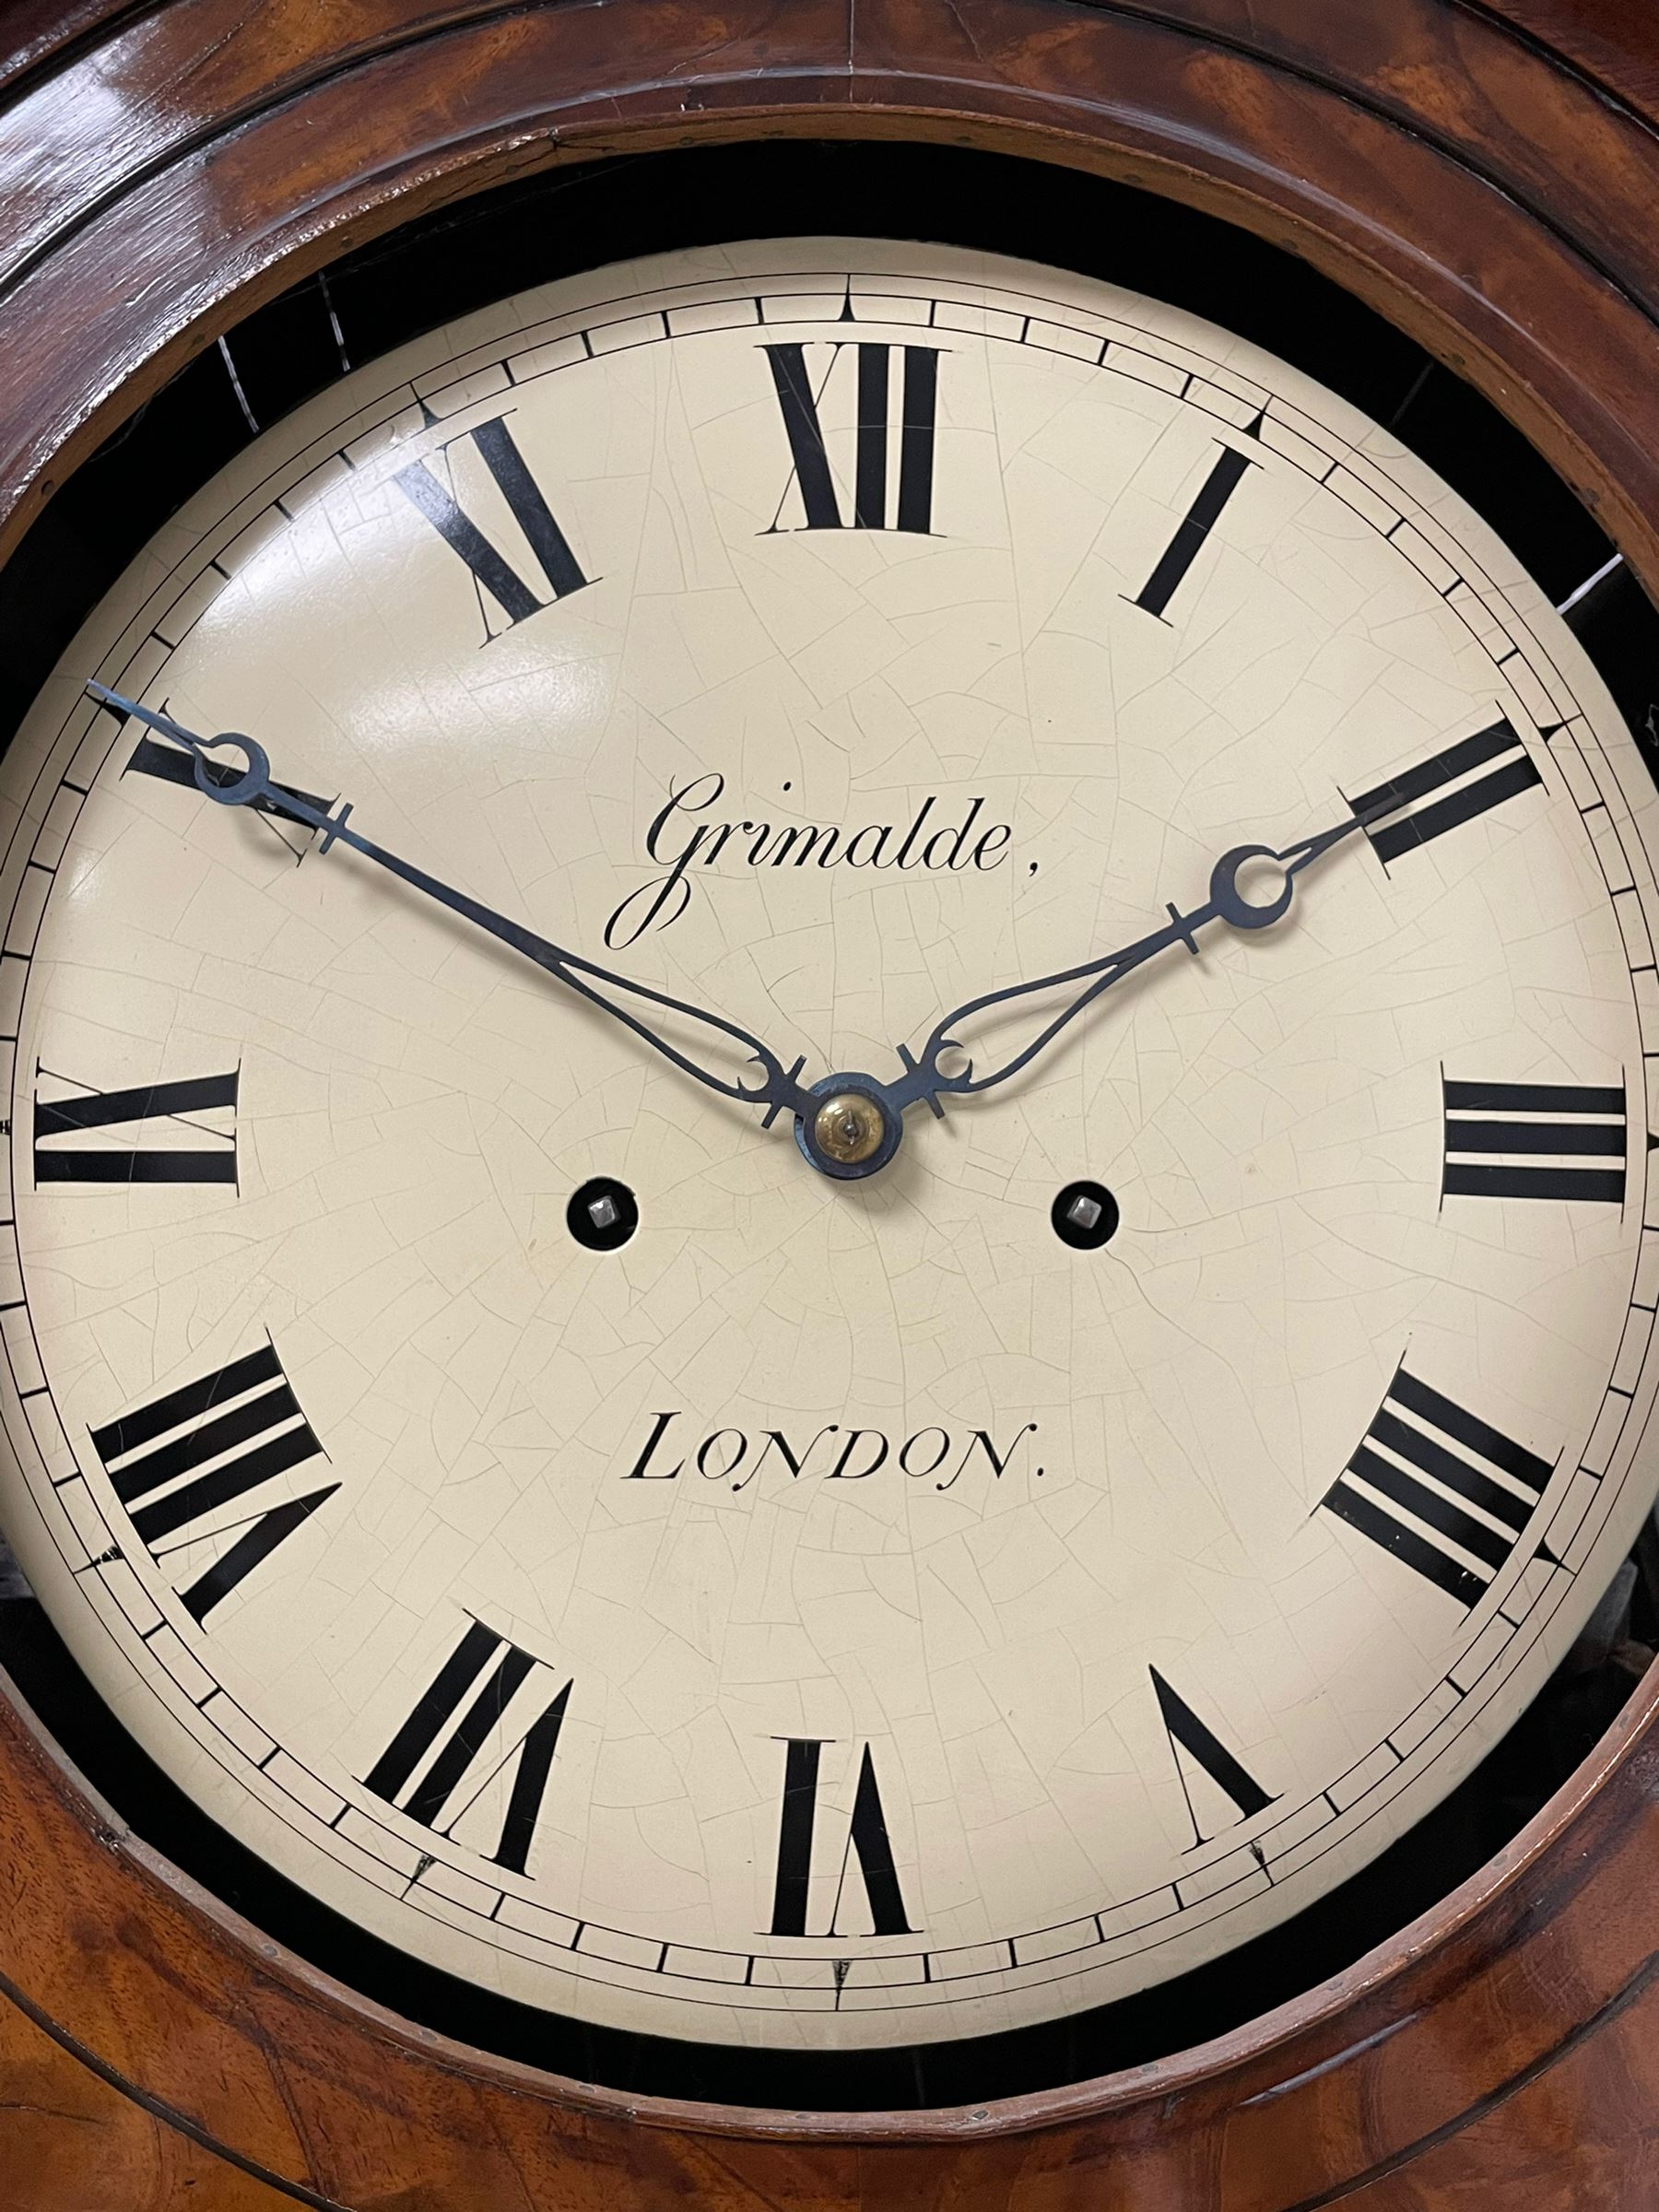 Grimalde of London - Mahogany 8-day longcase clock c1805 - Image 8 of 14